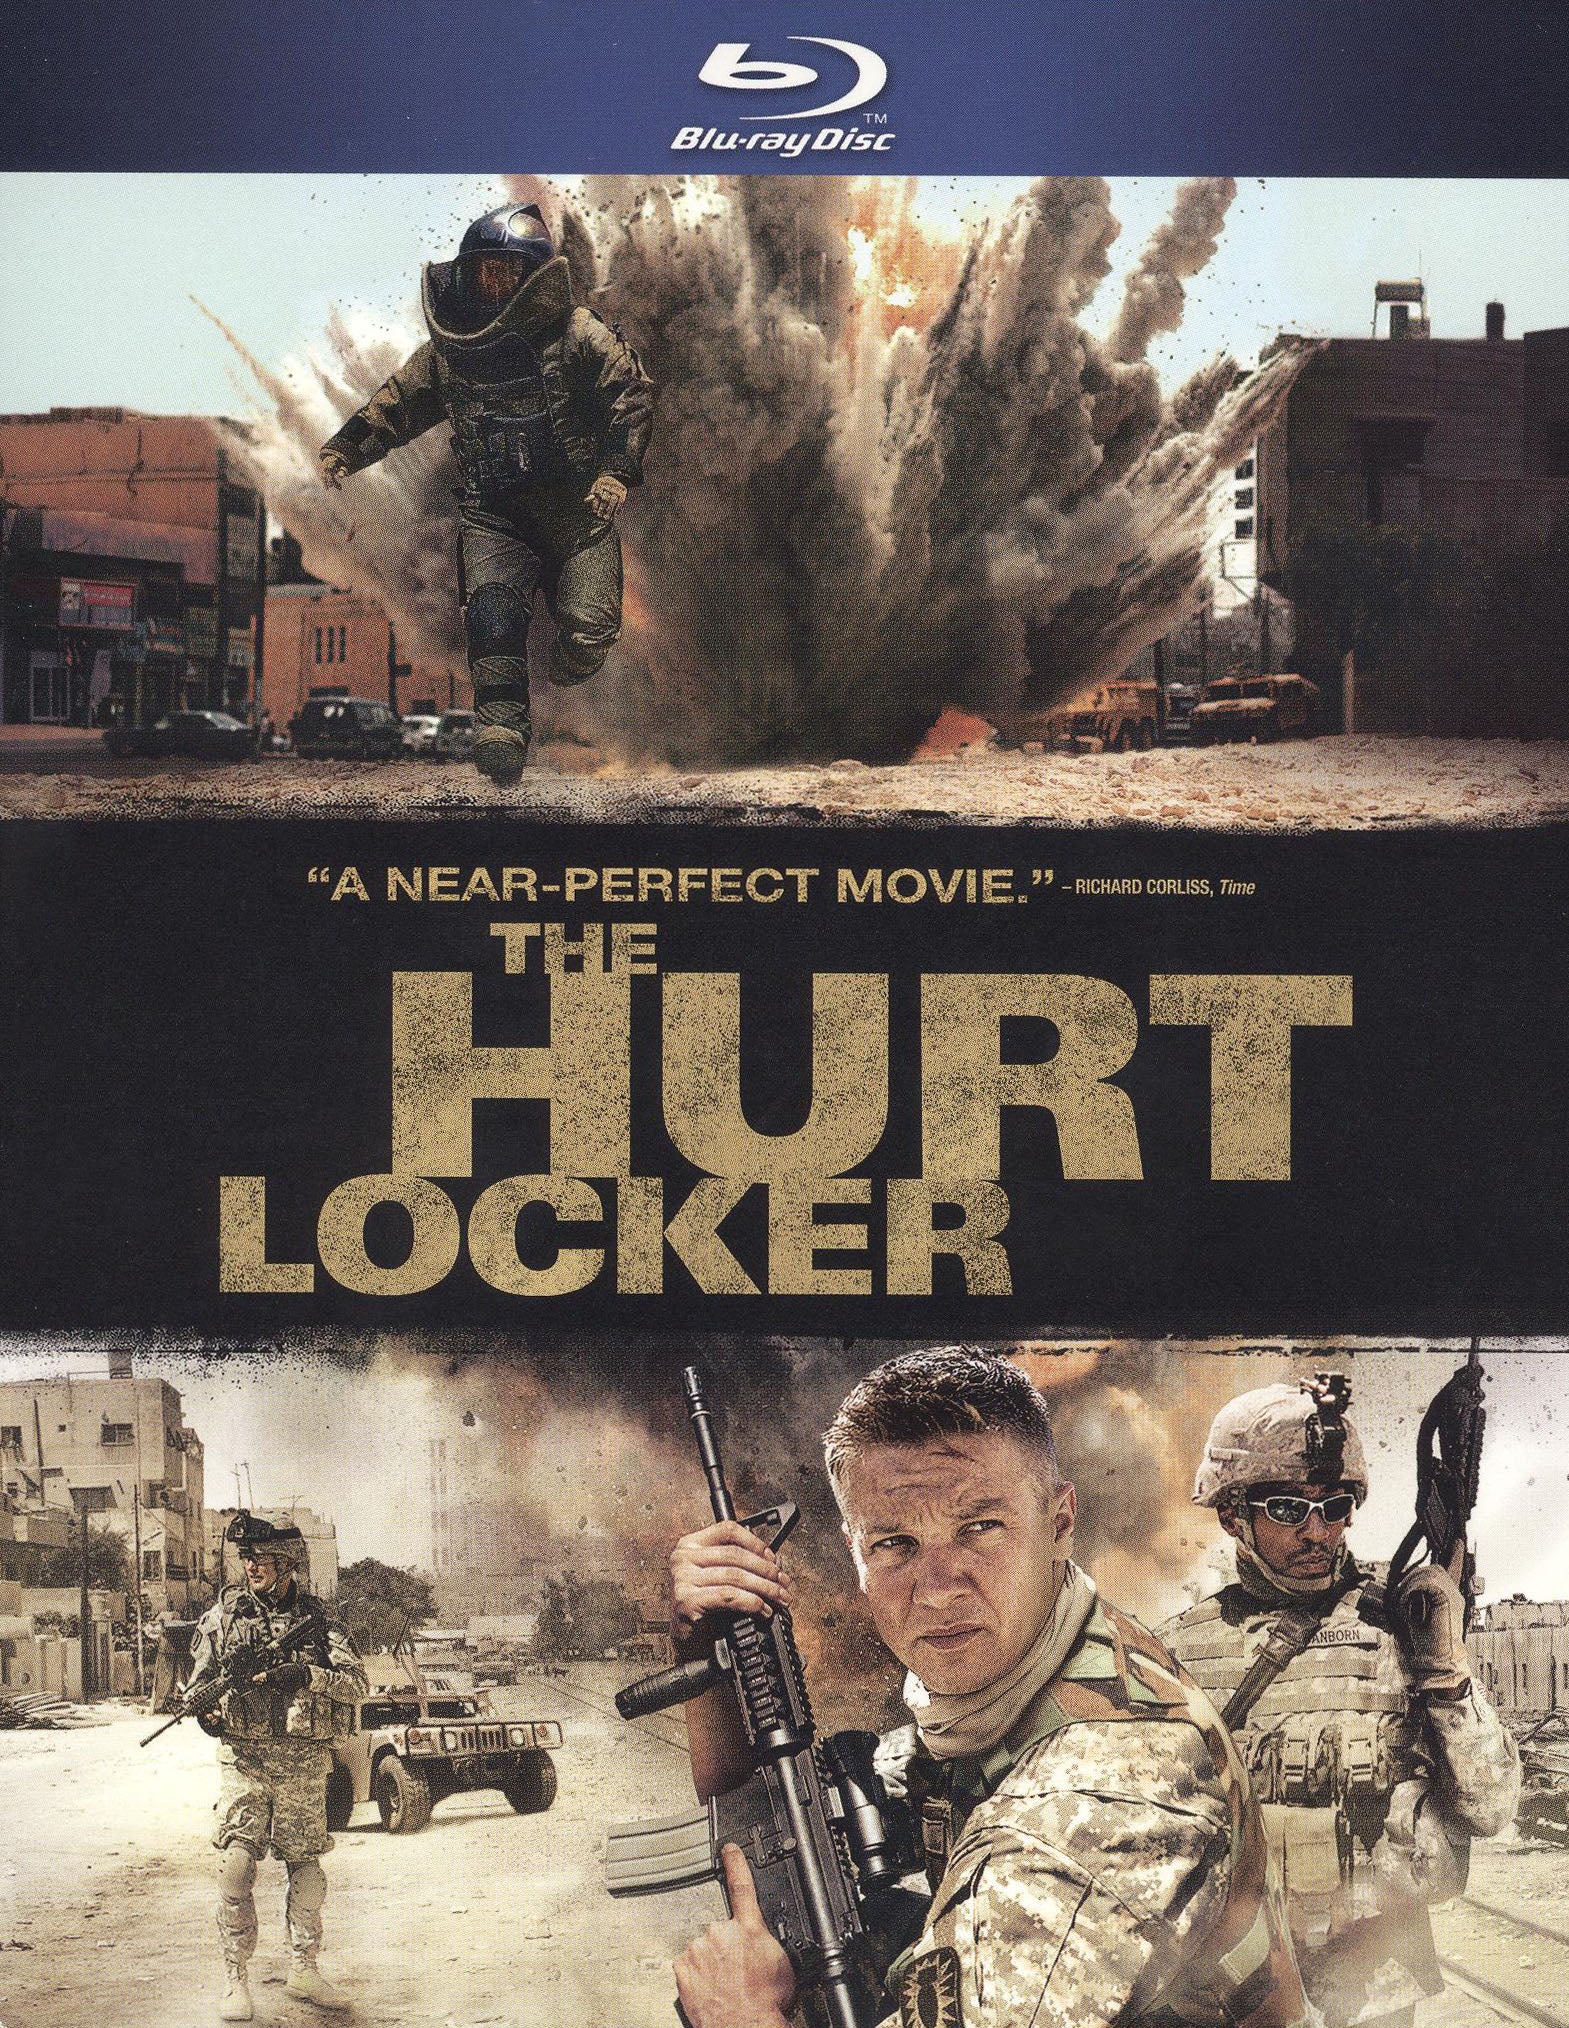 Hurt Locker [Blu-ray] cover art